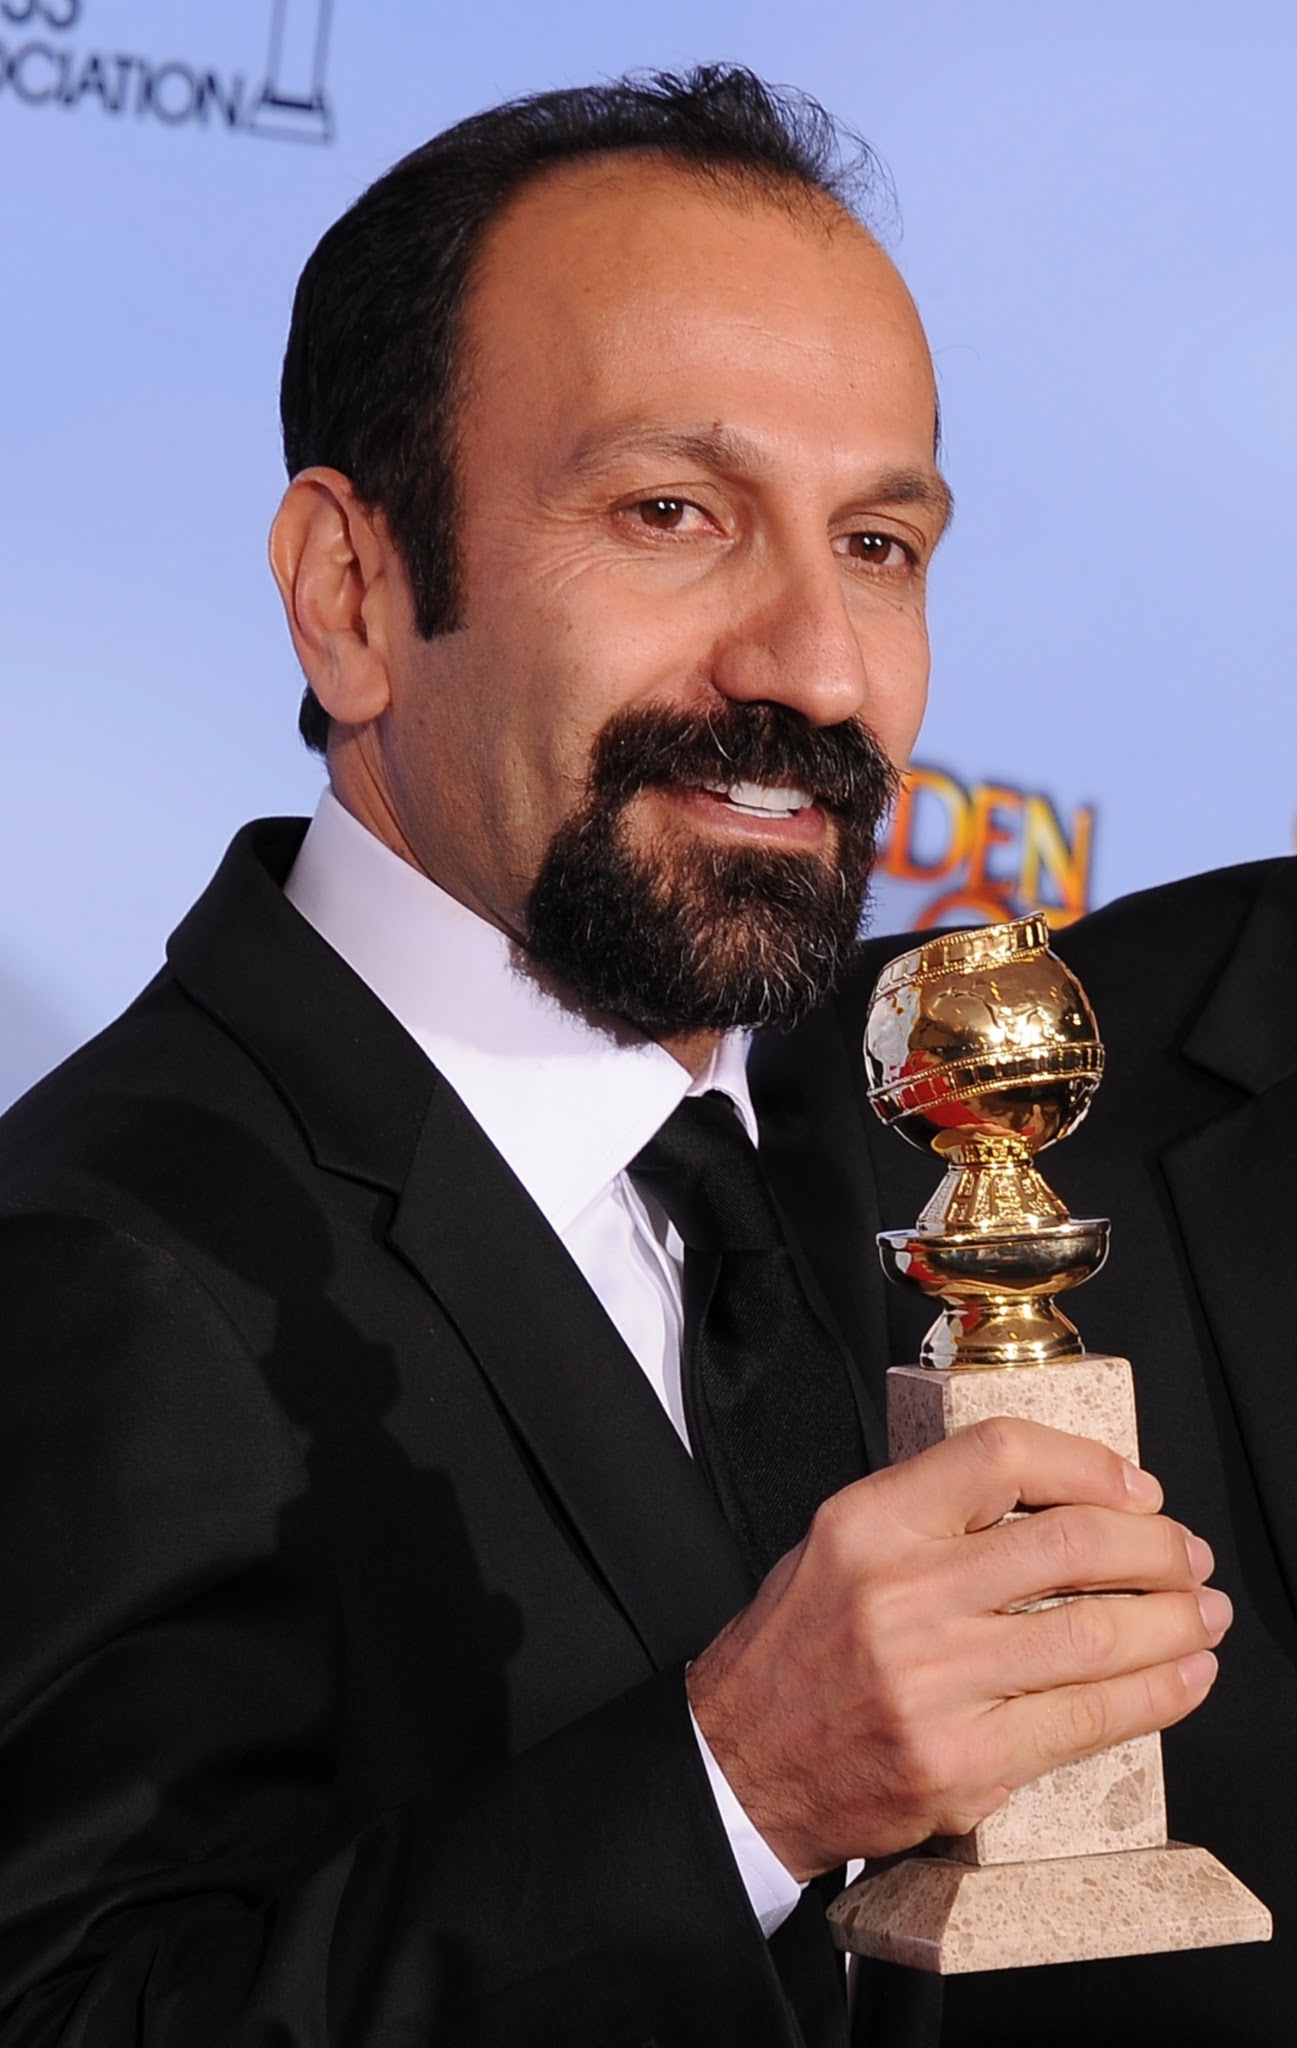 اصغر فرهادی، نویسنده و کارگردان سینما و تلویزیون - عکس جشنواره